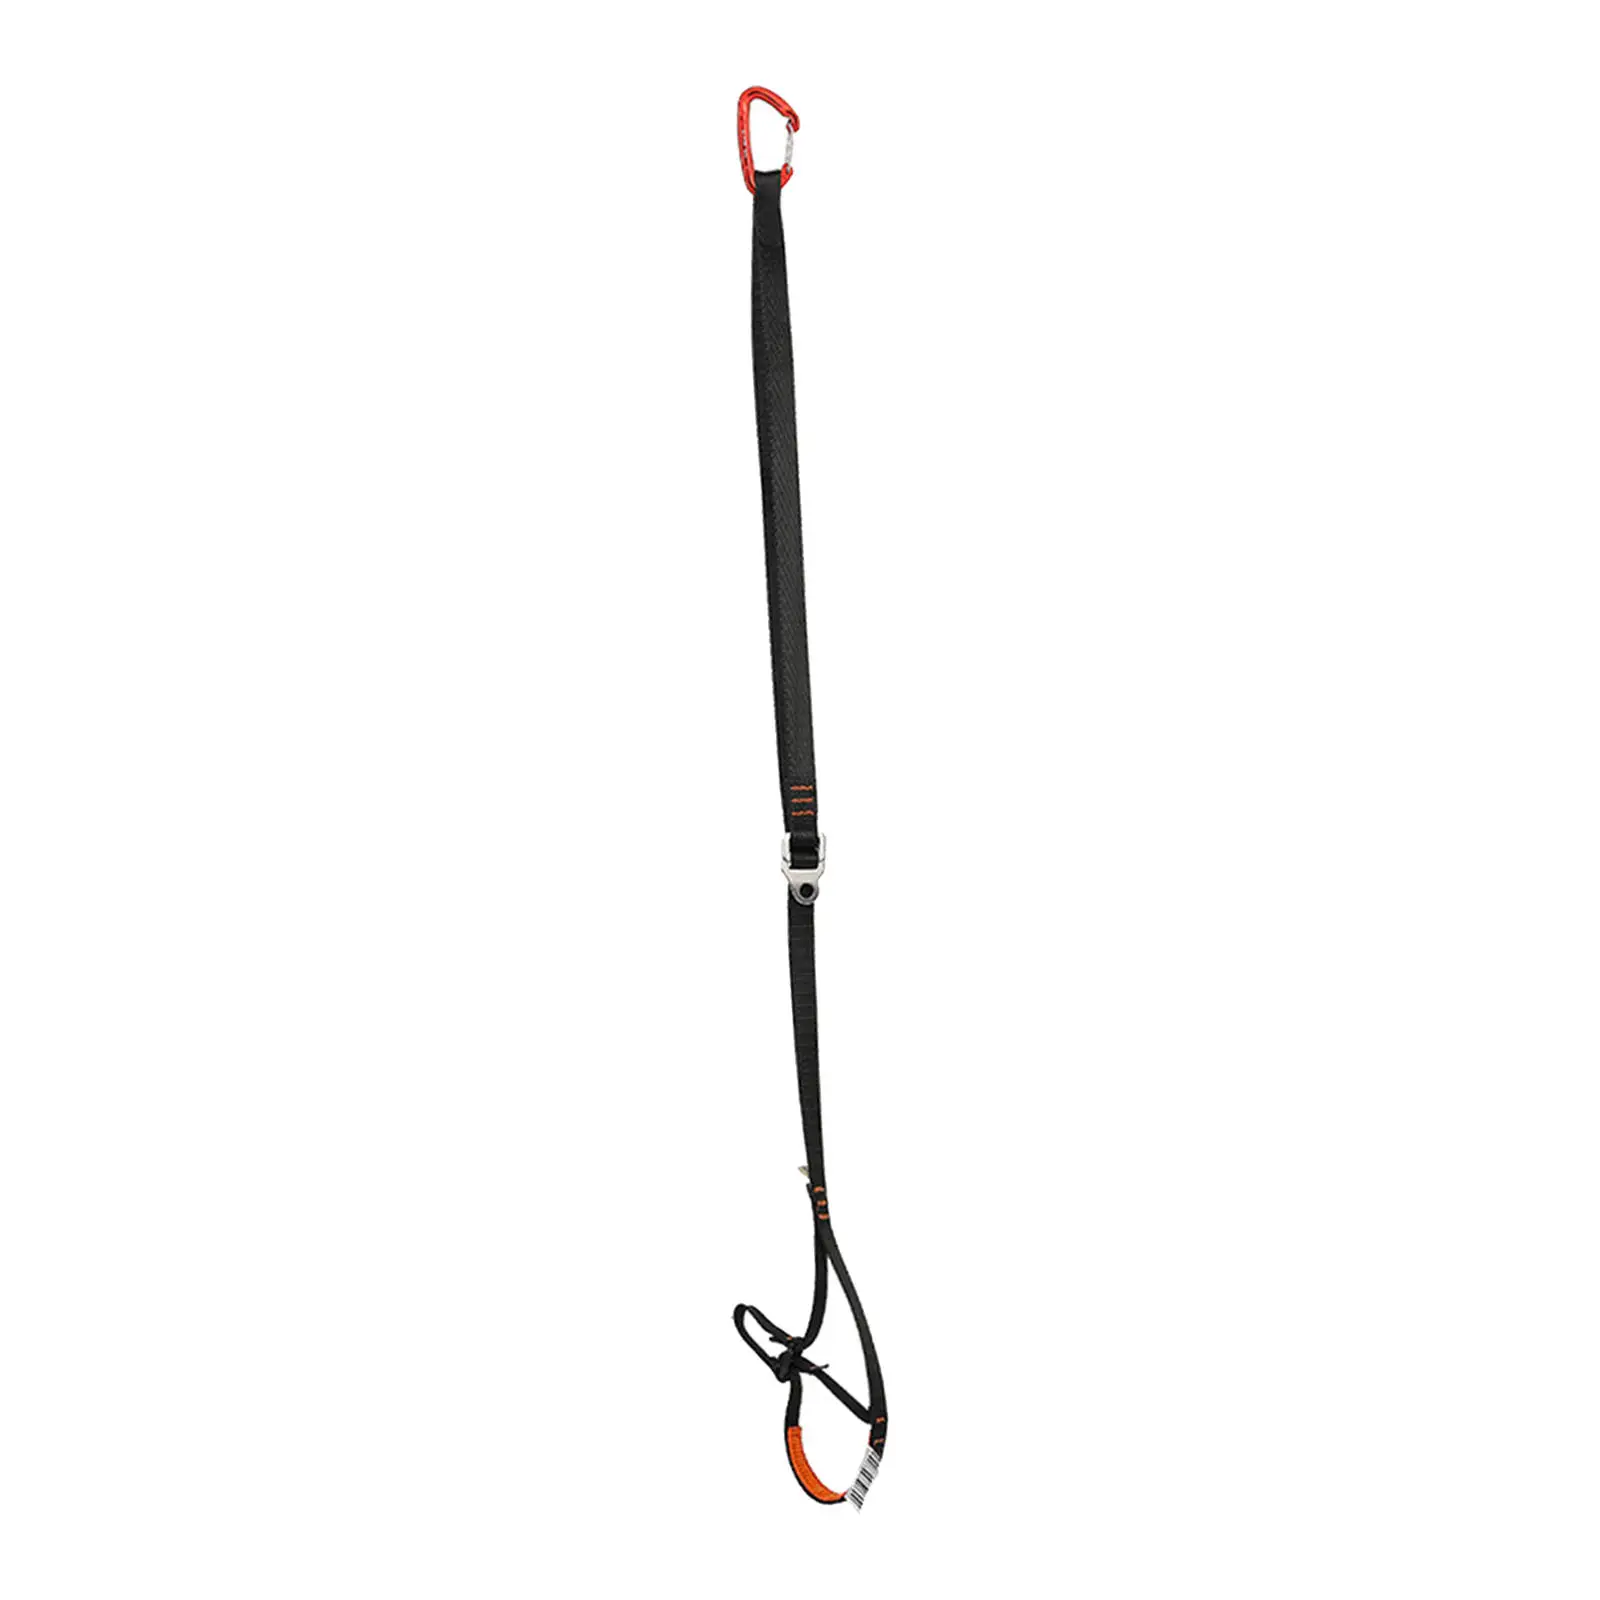 Outdoor Mountaineering Safety Rope,Adjustable Webbing Foot Loop Climbing Foot Loop Ascender Sling Belt Foot Pedal Band